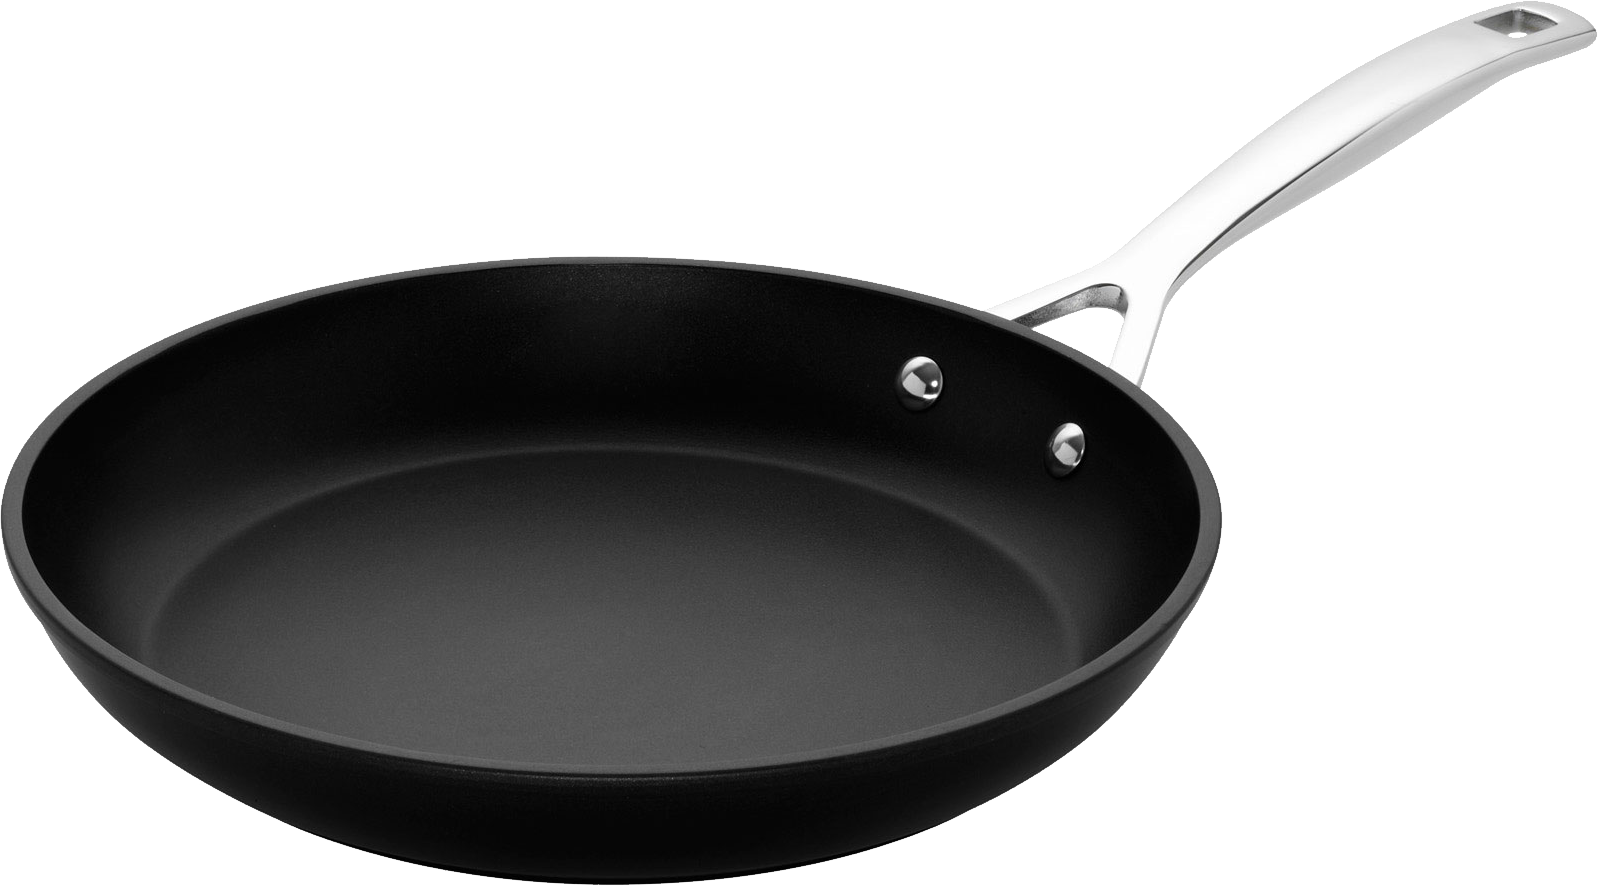 Frying Pan Png Image - Frying Pan, Transparent background PNG HD thumbnail